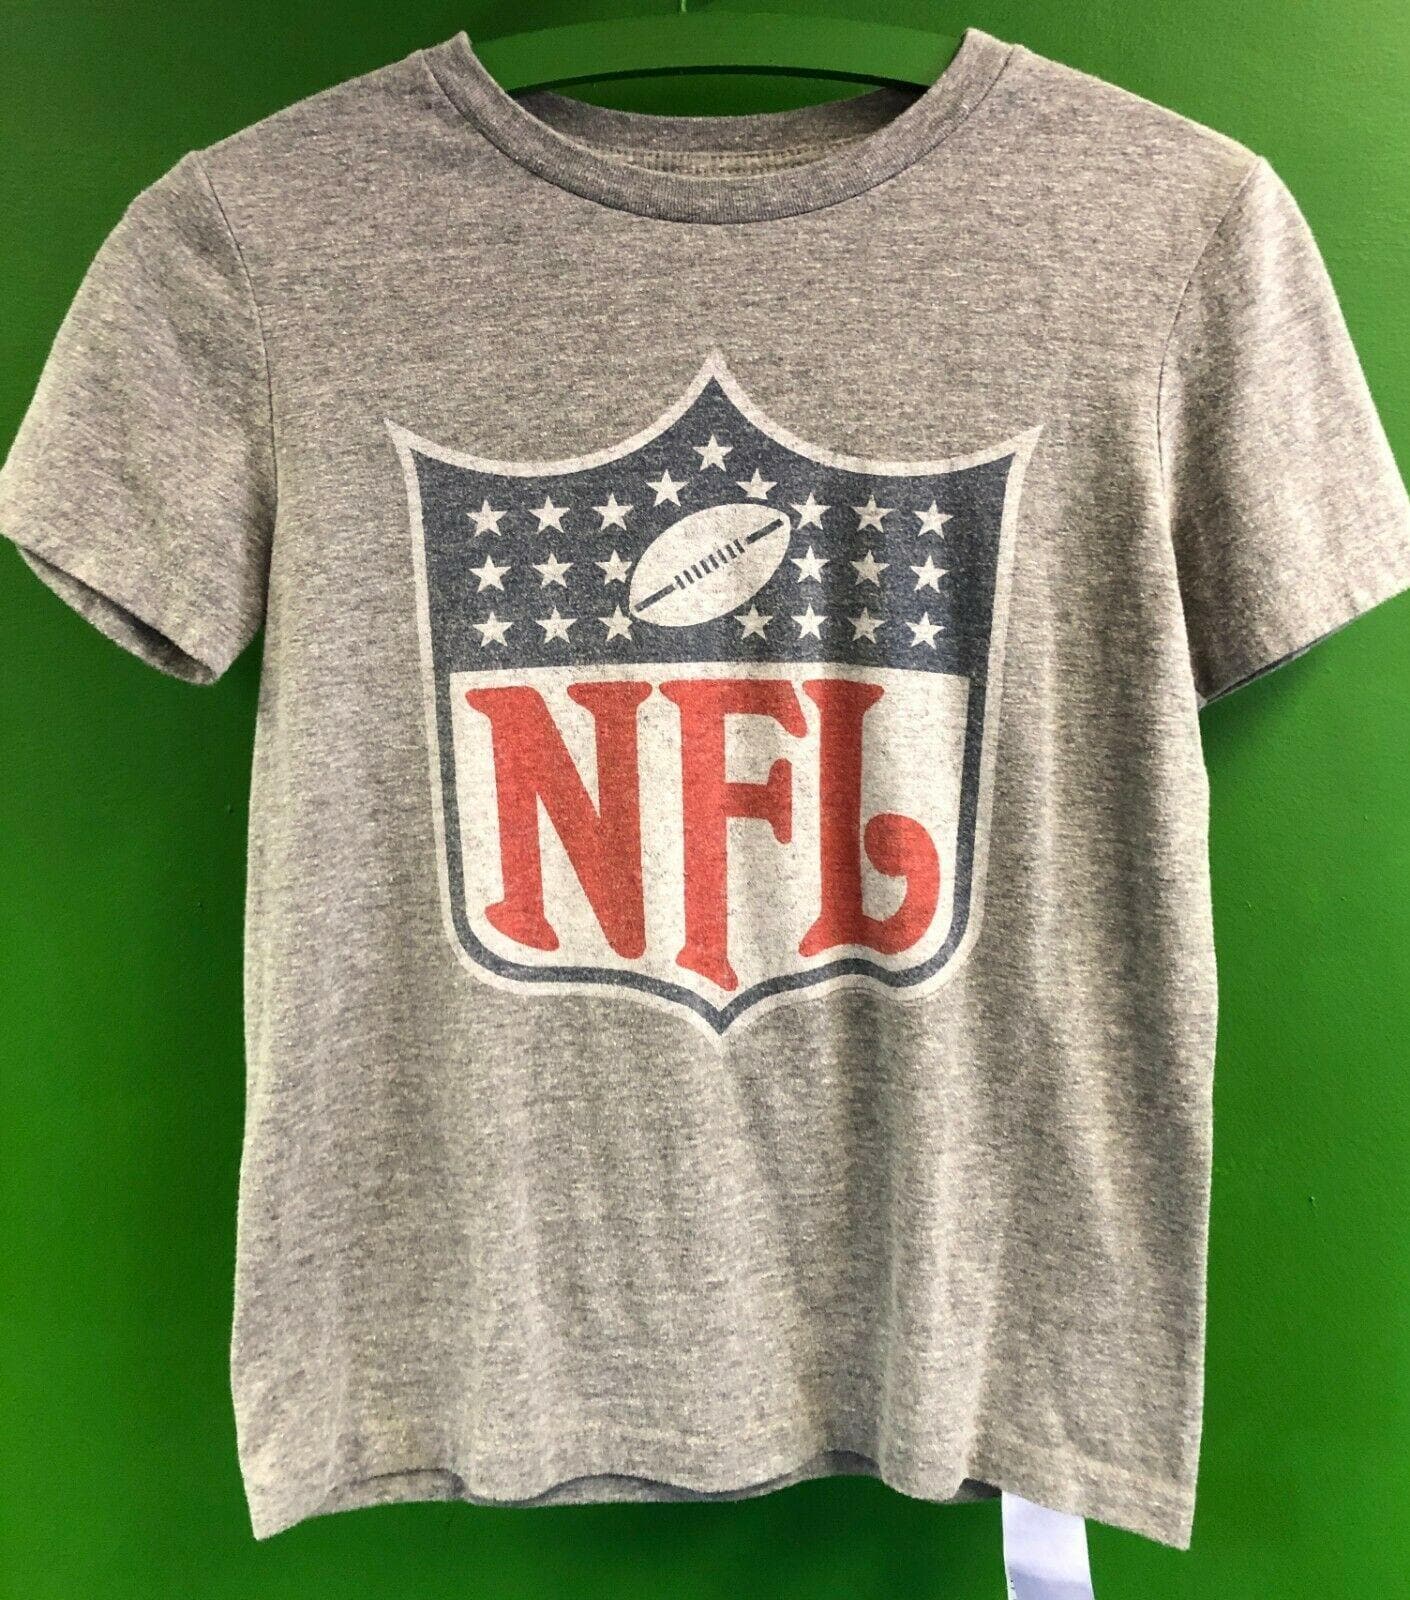 NFL Logo T-Shirt Heathered Grey Retro Style Youth Small - Medium 8-10